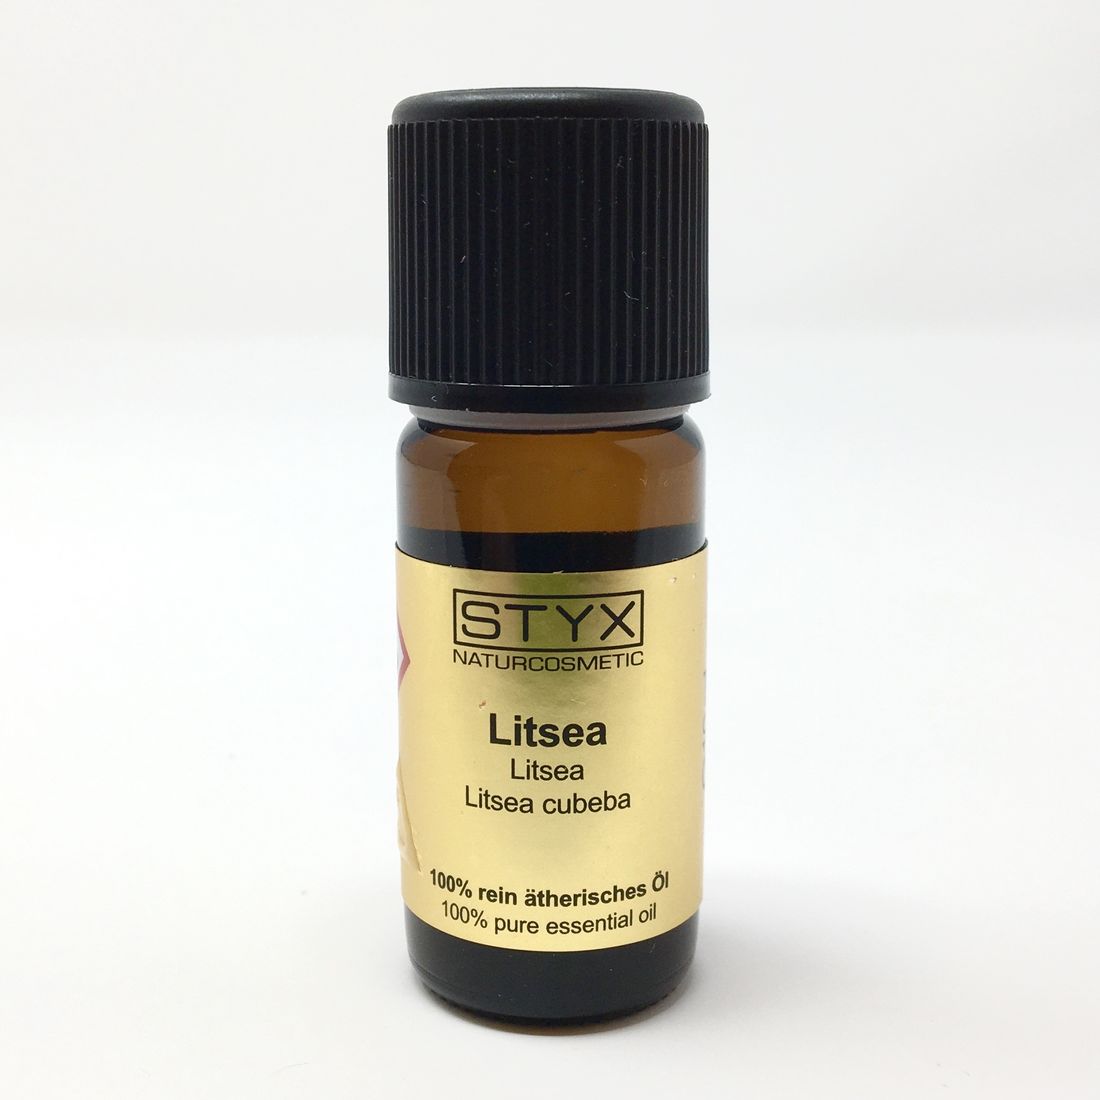 Styx Litsea cubeba 10 ml 100% reines ätherisches Öl